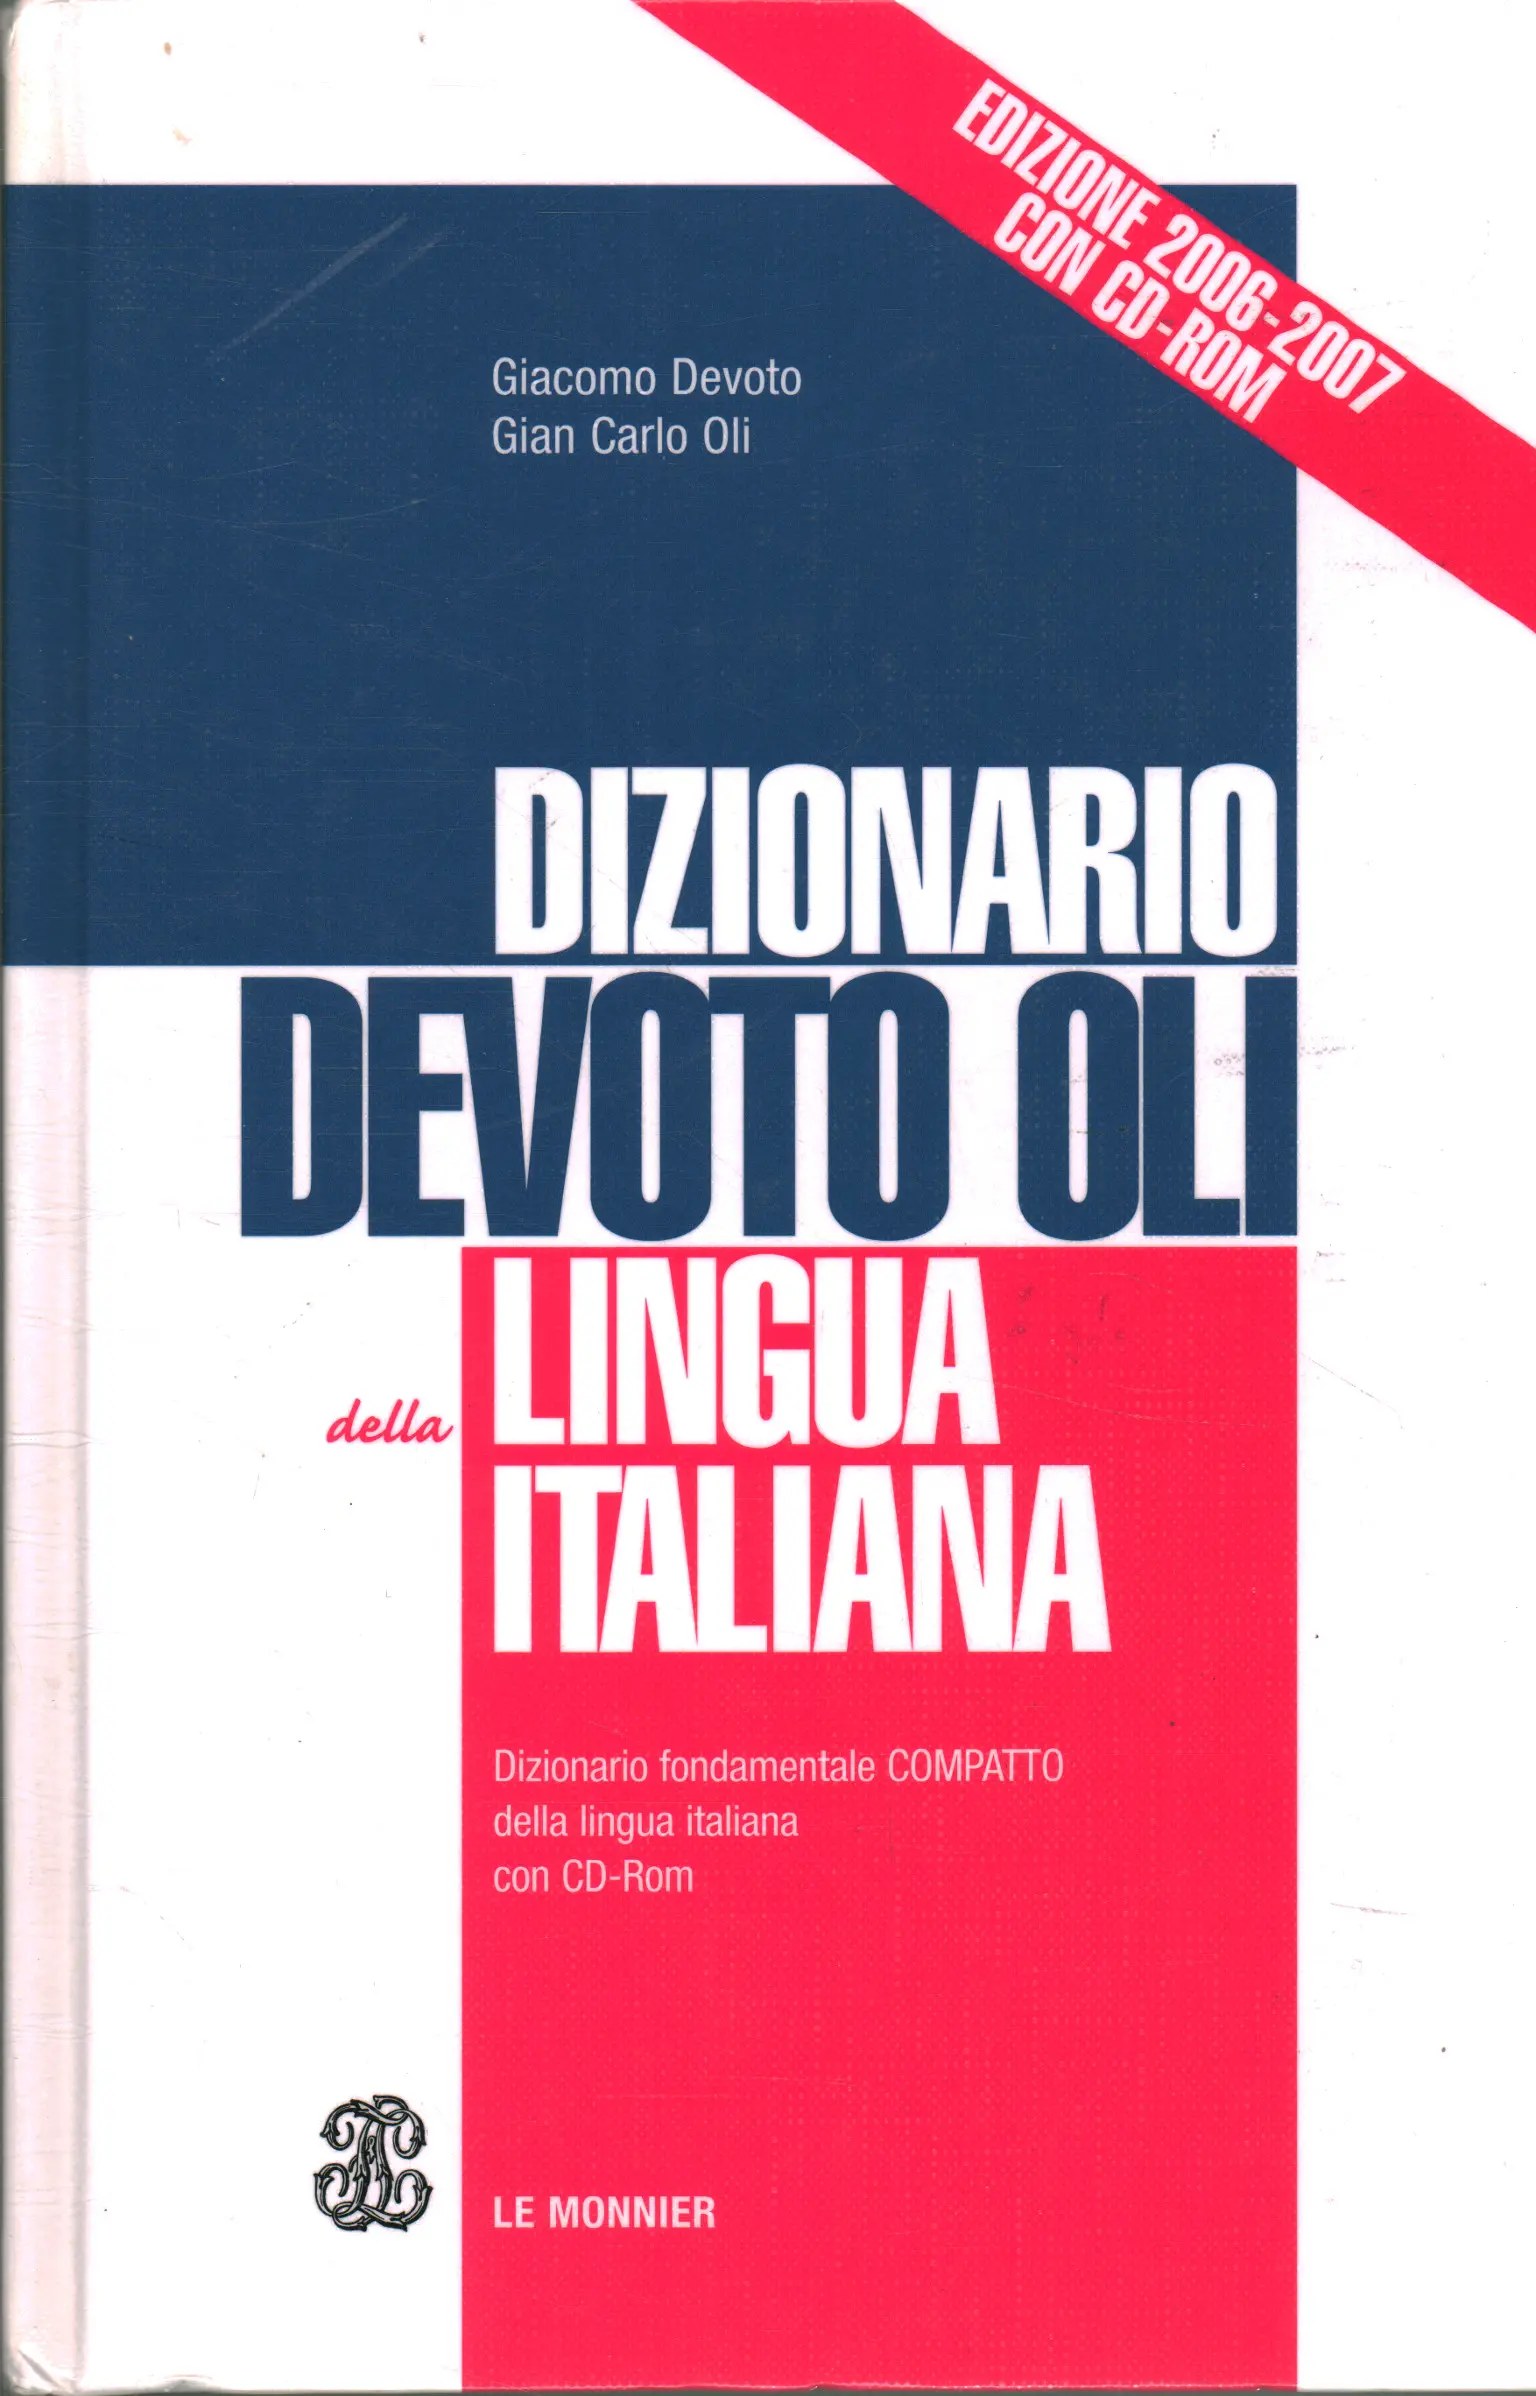 Gian Carlo Oli: Libri e opere in offerta